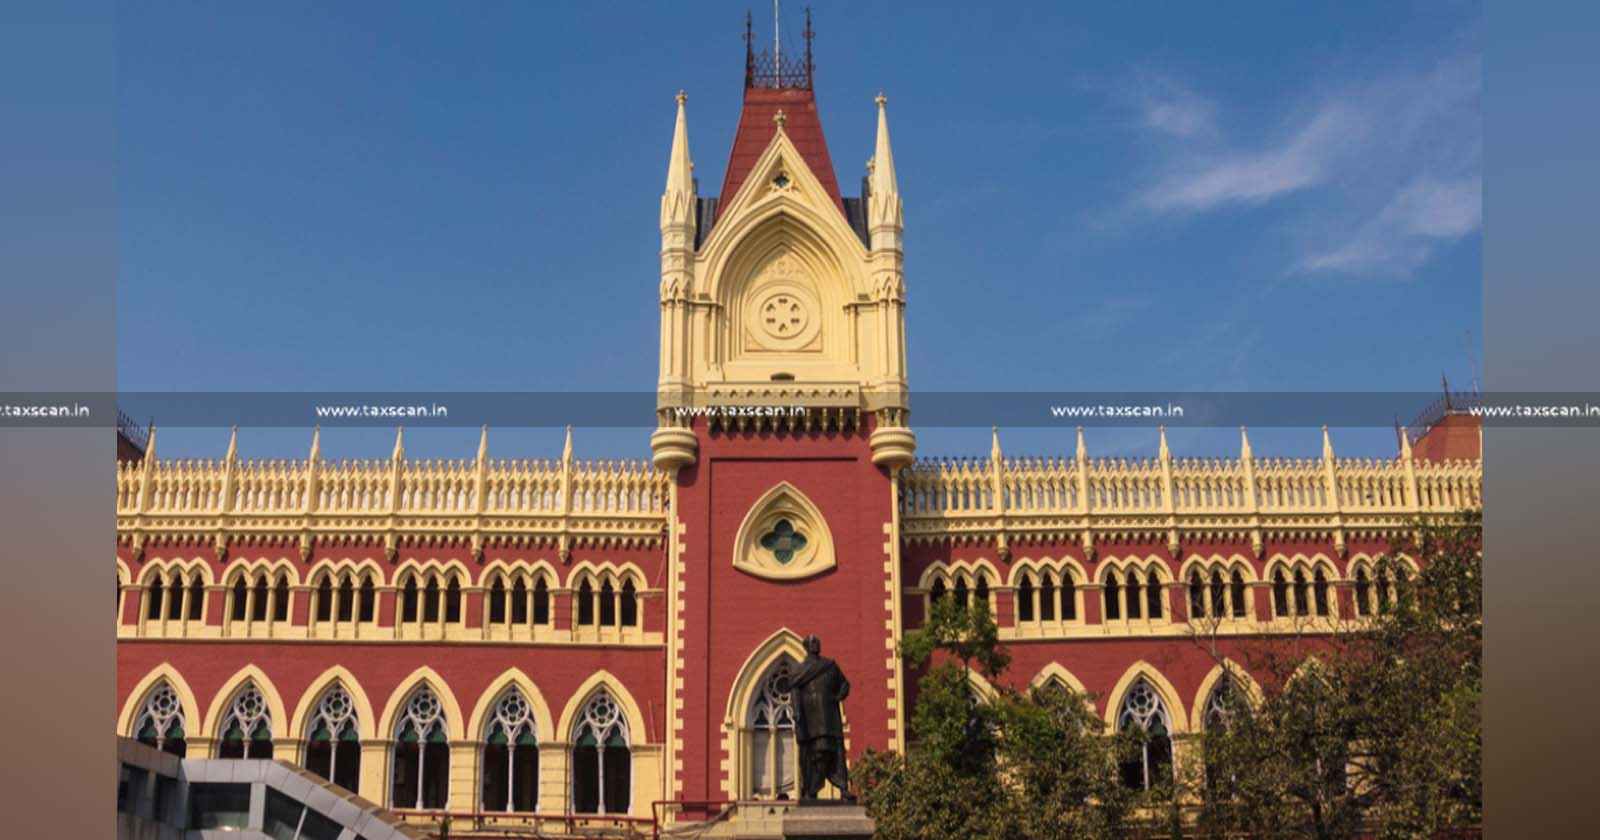 CBLR - CBLR 2018 - Calcutta Highcourt - Revocation of Customs Broker License - taxscan